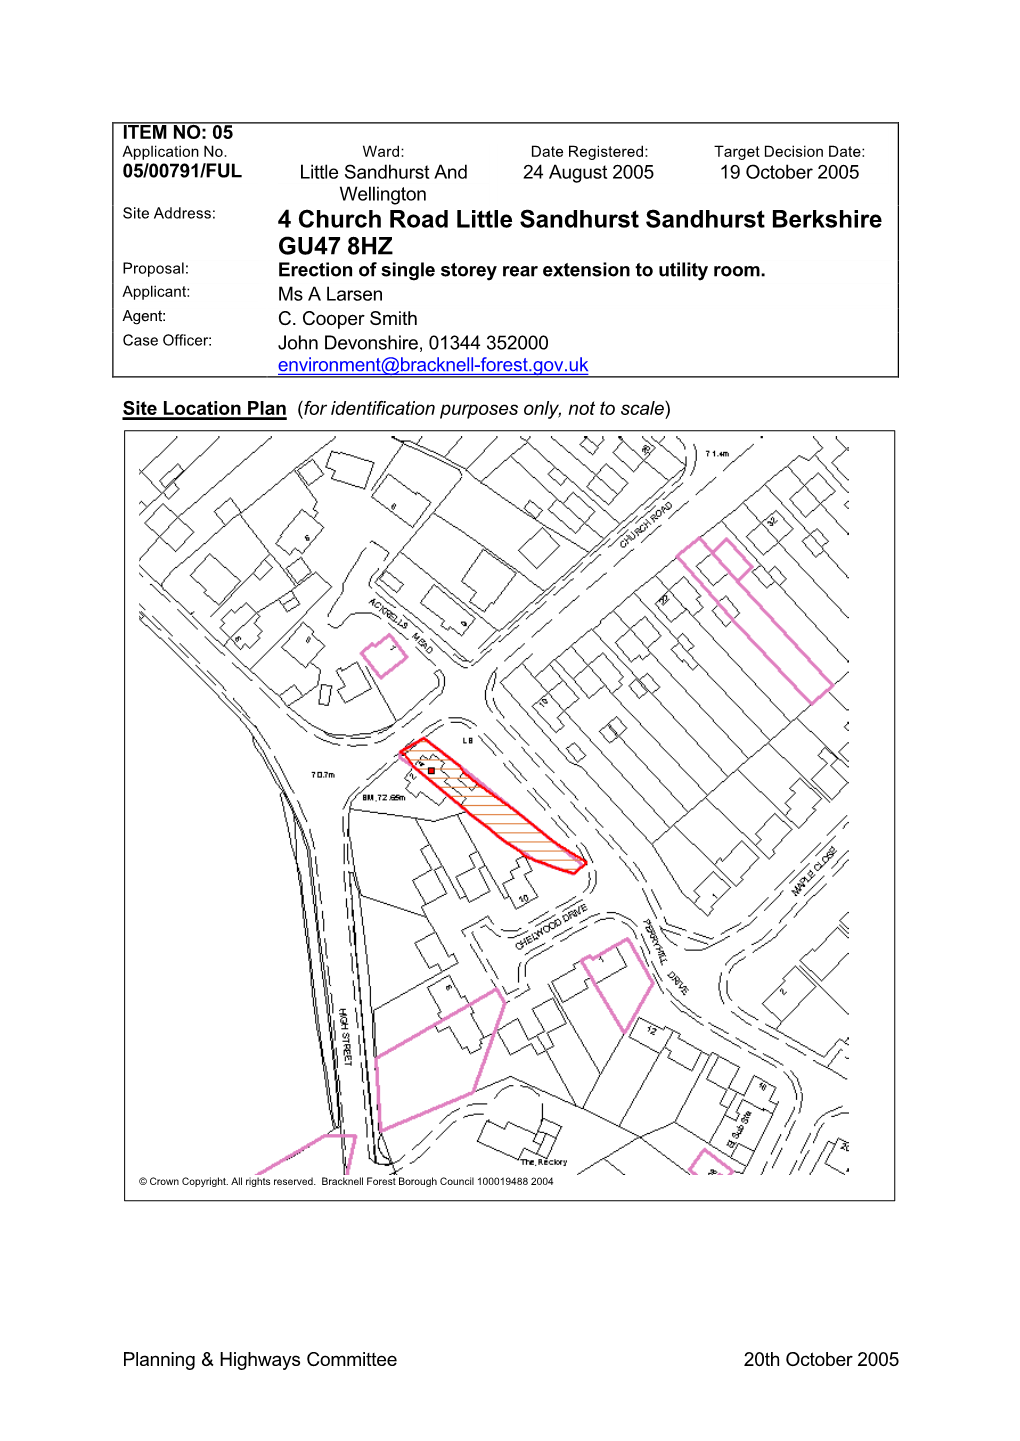 4 Church Road Little Sandhurst Sandhurst Berkshire GU47 8HZ Proposal: Erection of Single Storey Rear Extension to Utility Room